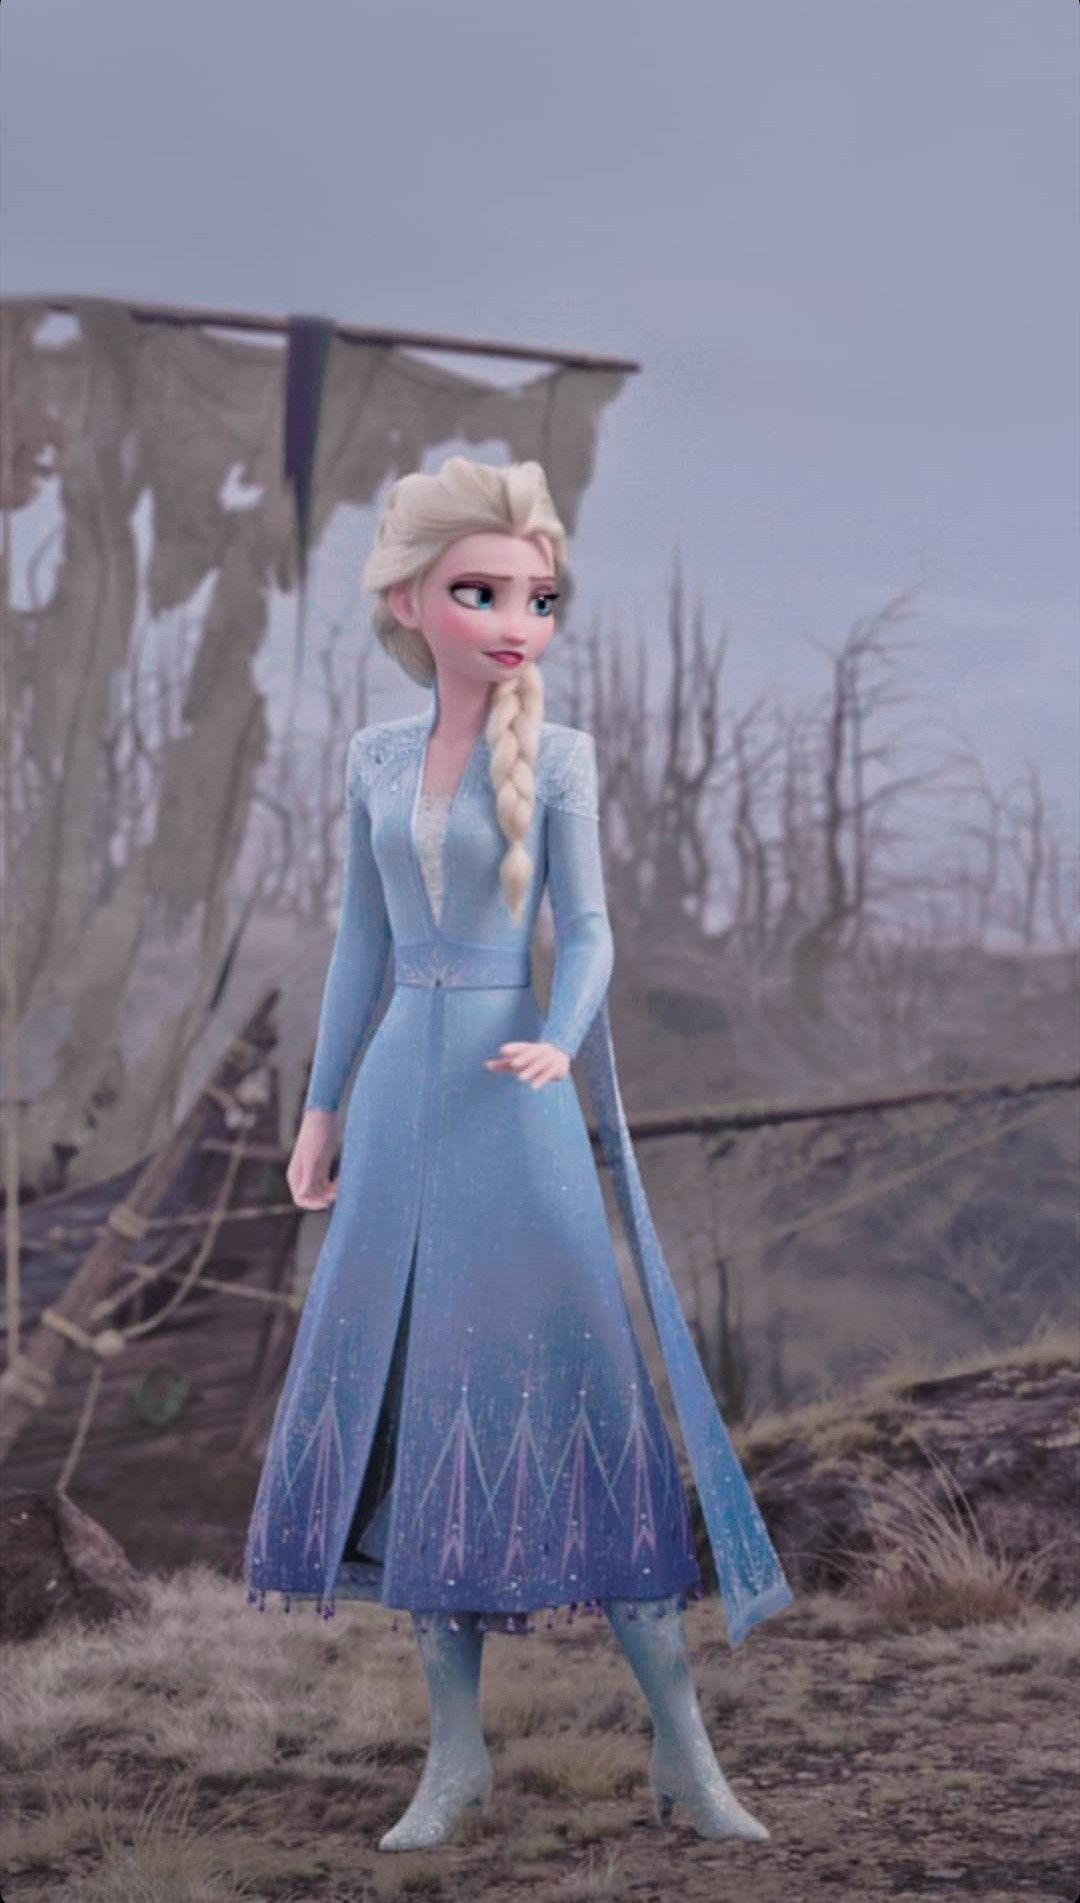 4K] Disney Princess - Anna Frozen 2 (1) by AlexandreGRONDIN on DeviantArt